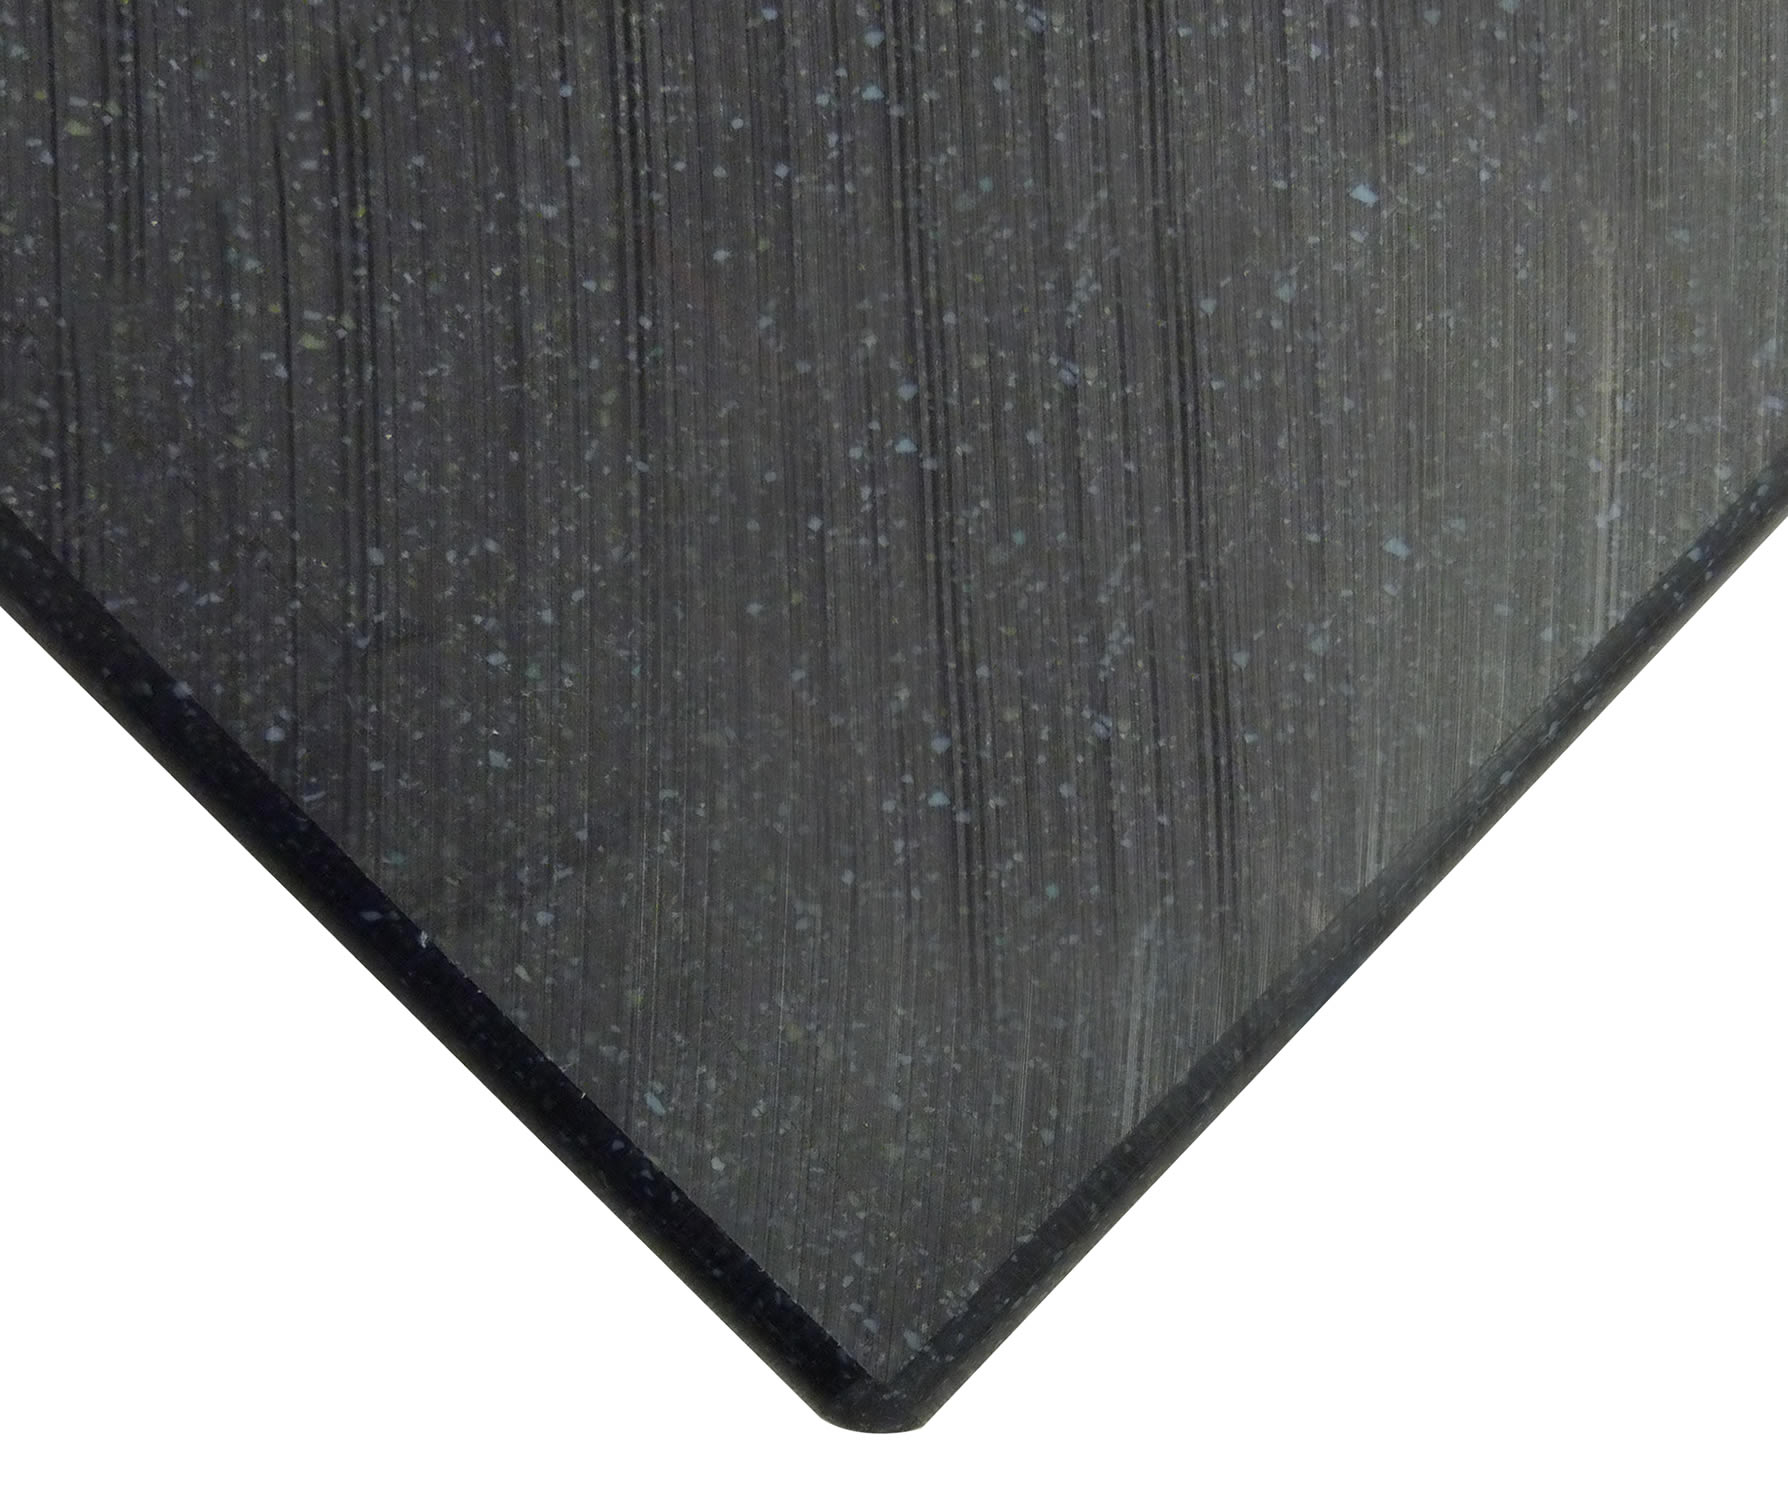 Black UHMW Polyethylene Plastic Sheet 1-1/4 Thick x 8 Wide x 24 Long 